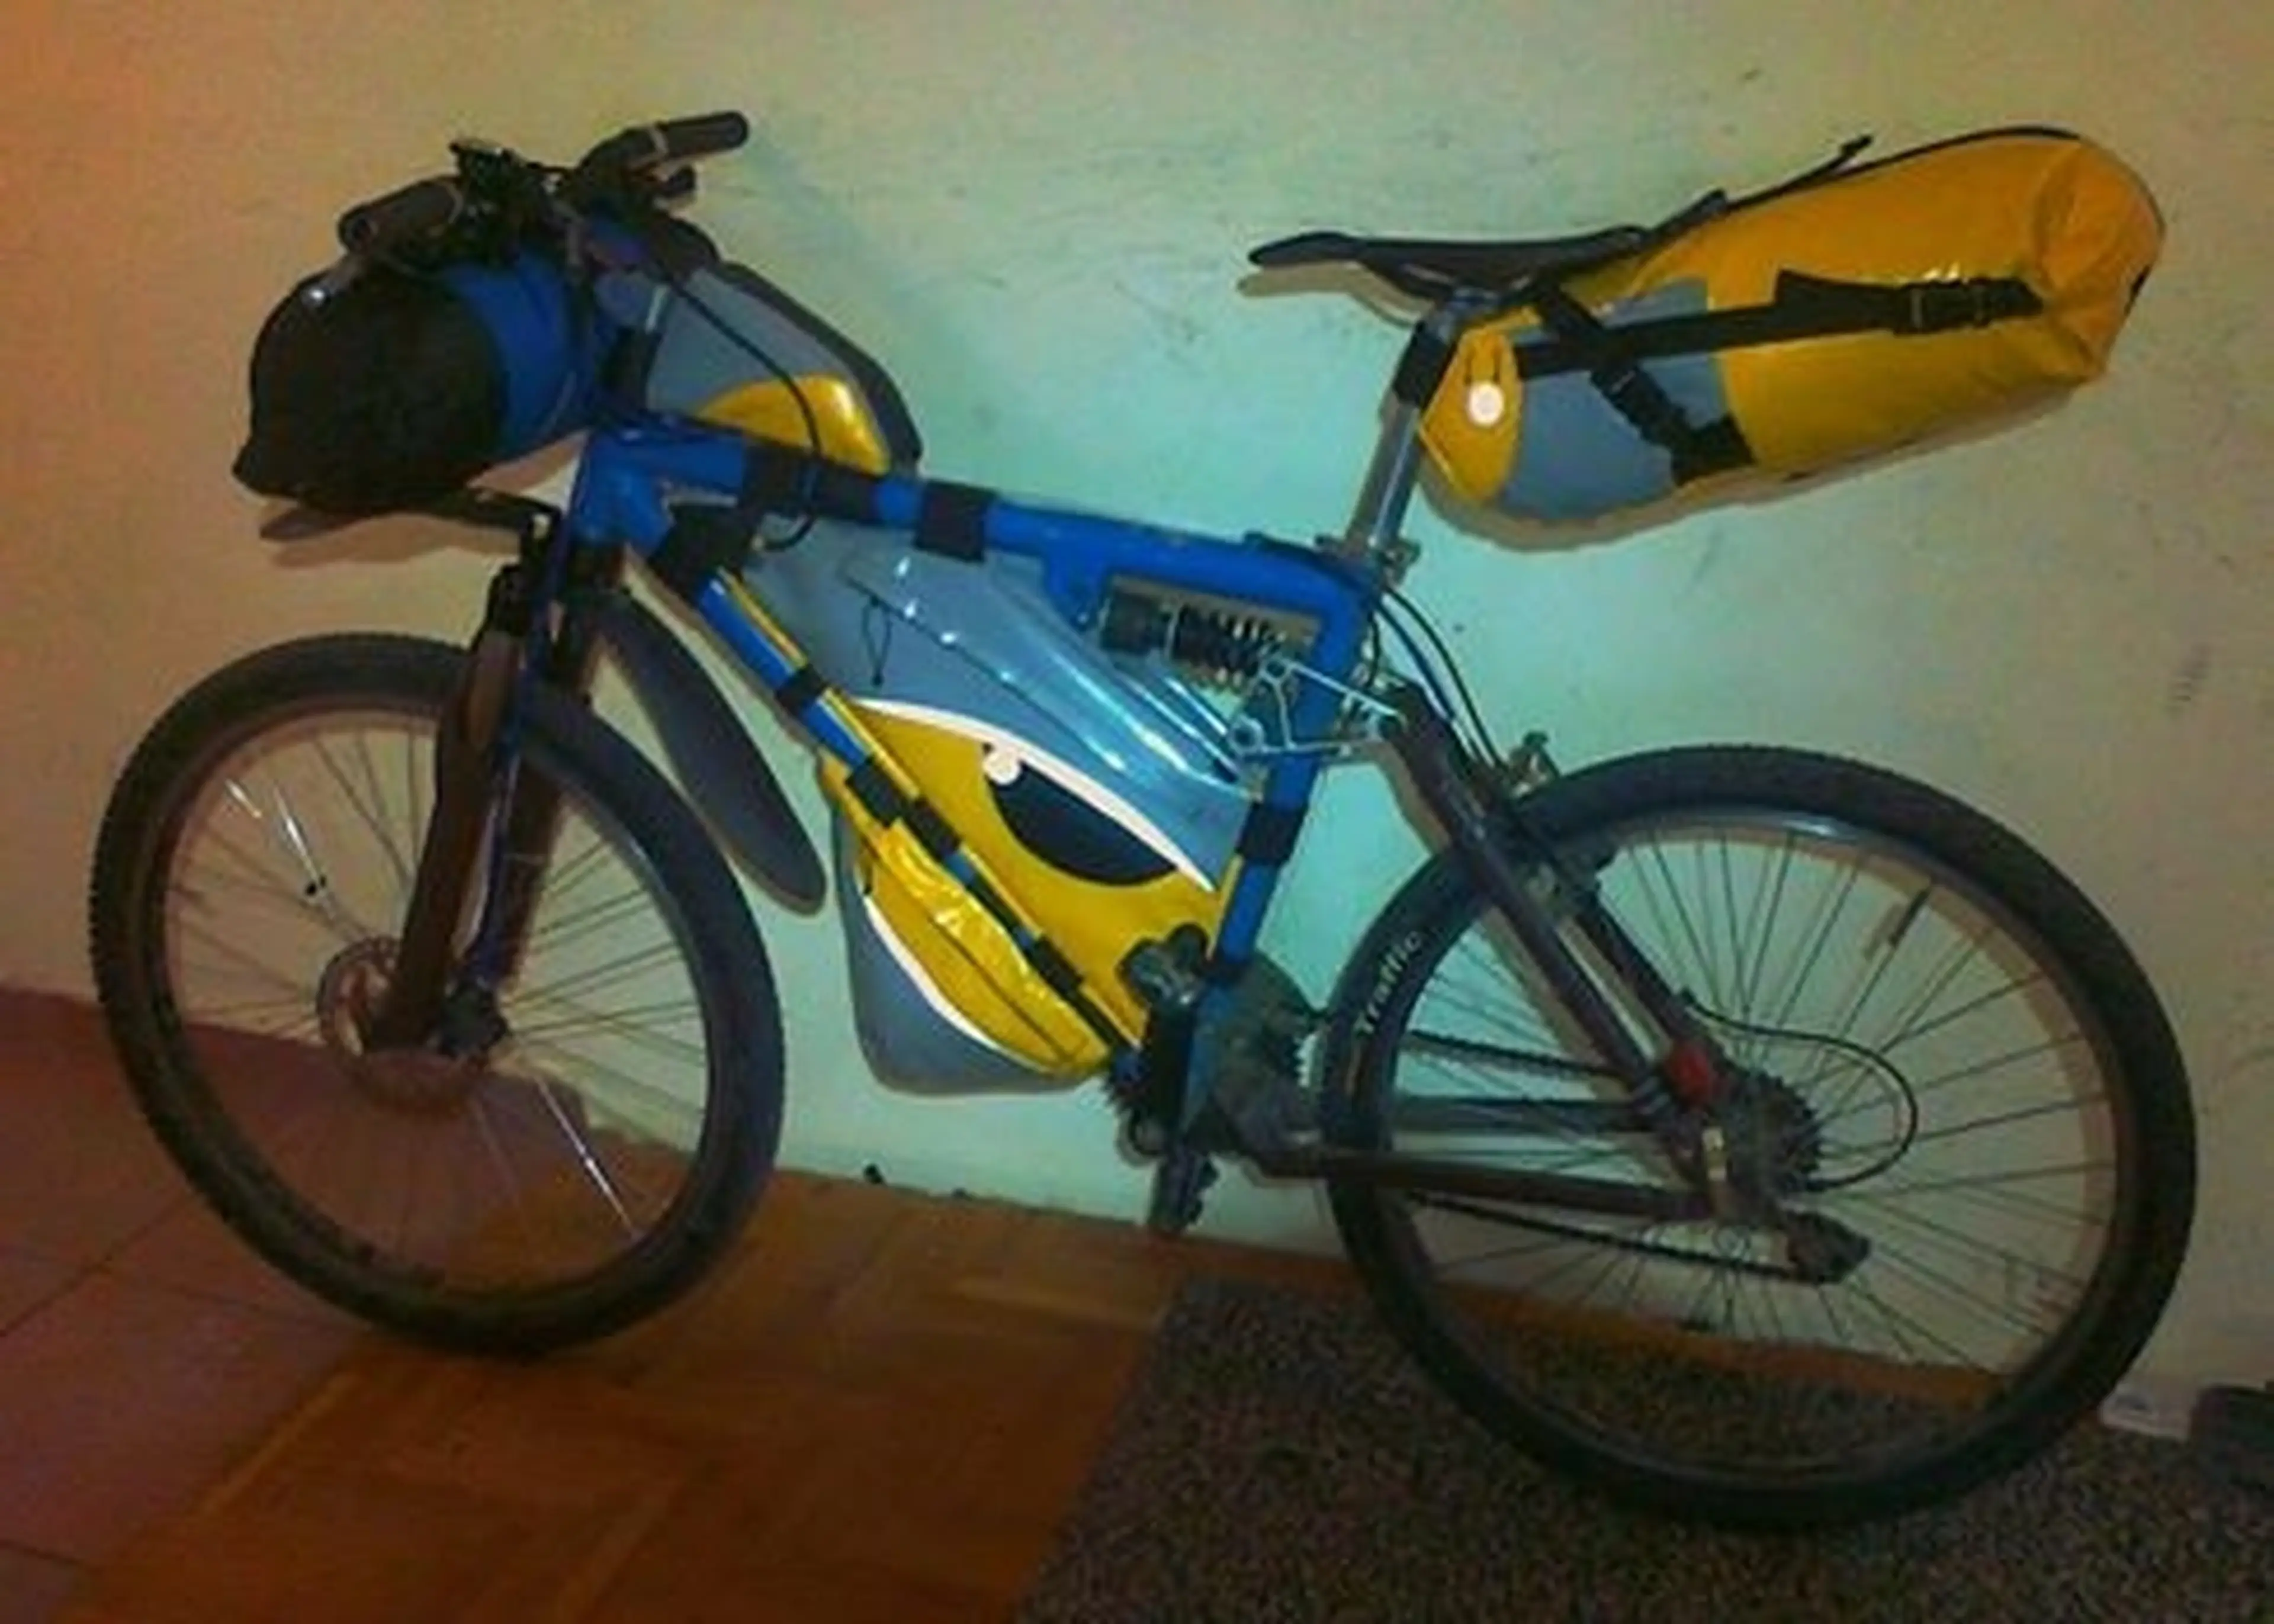 2. Genti pentru bicicleta (buikepacking) la comanda